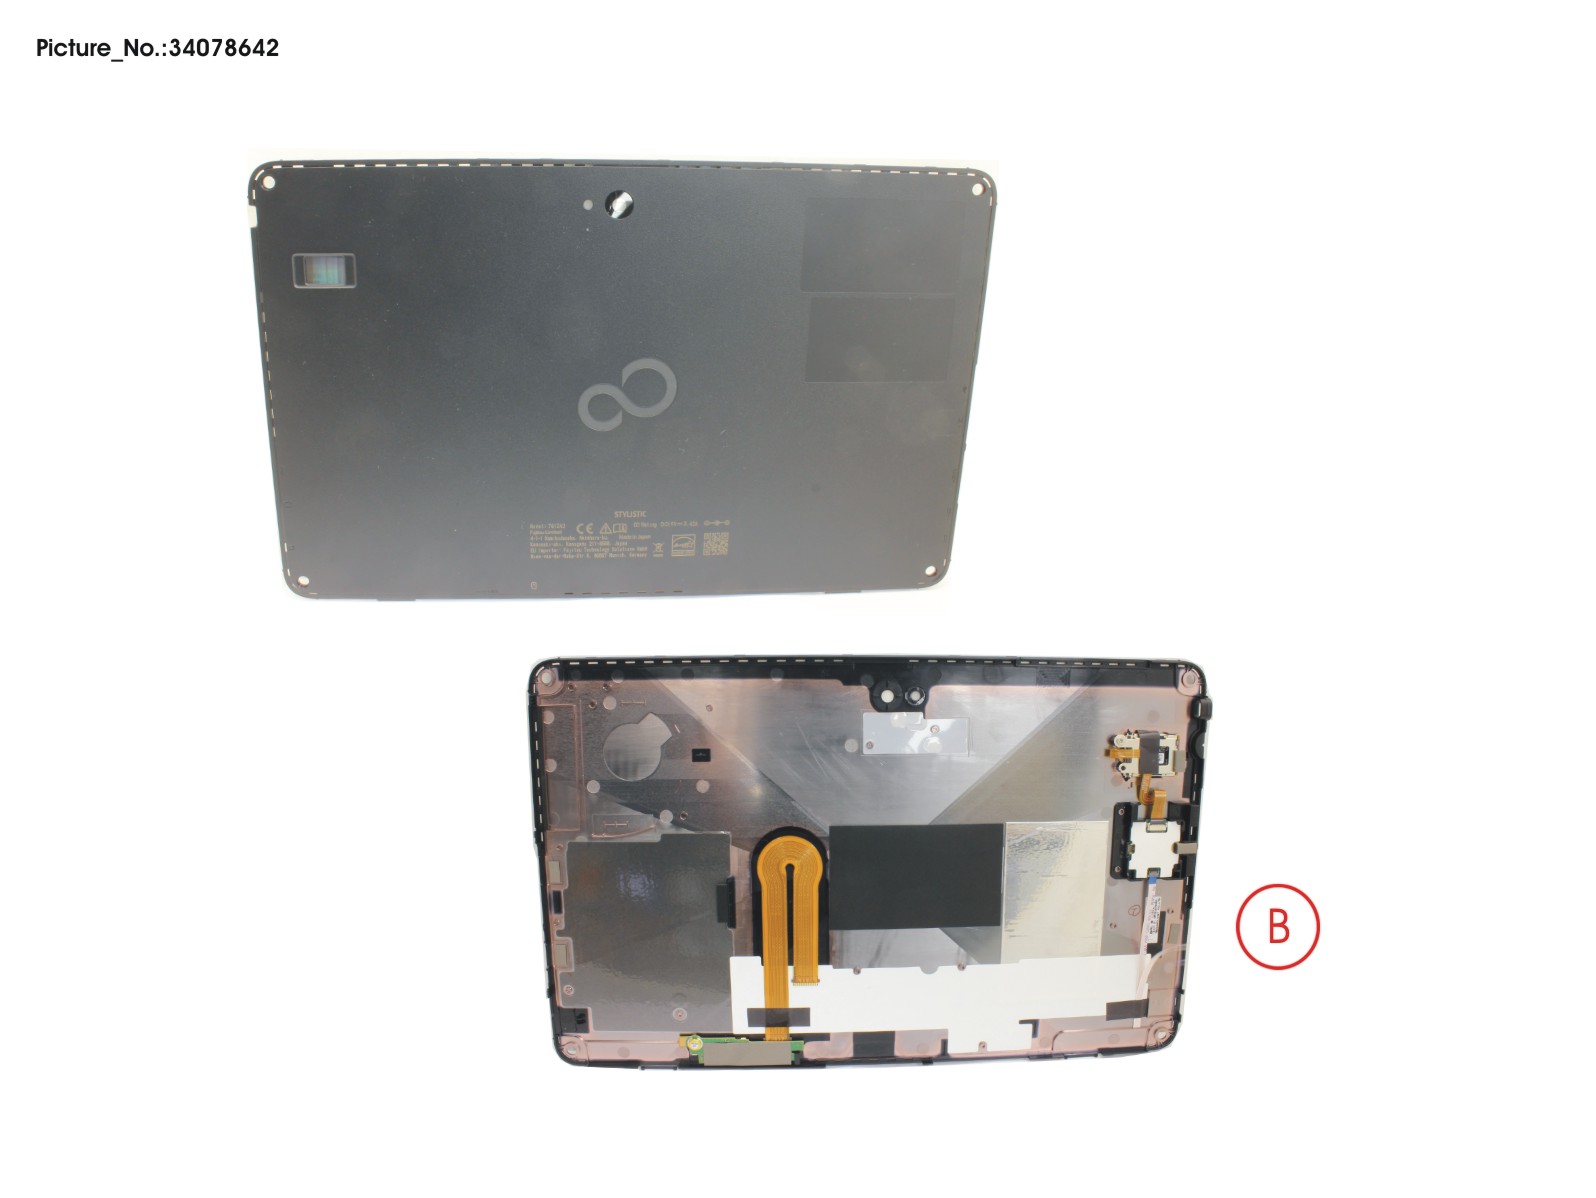 LCD BACK COVER W/ FNG (SECBIO),SIM ICON